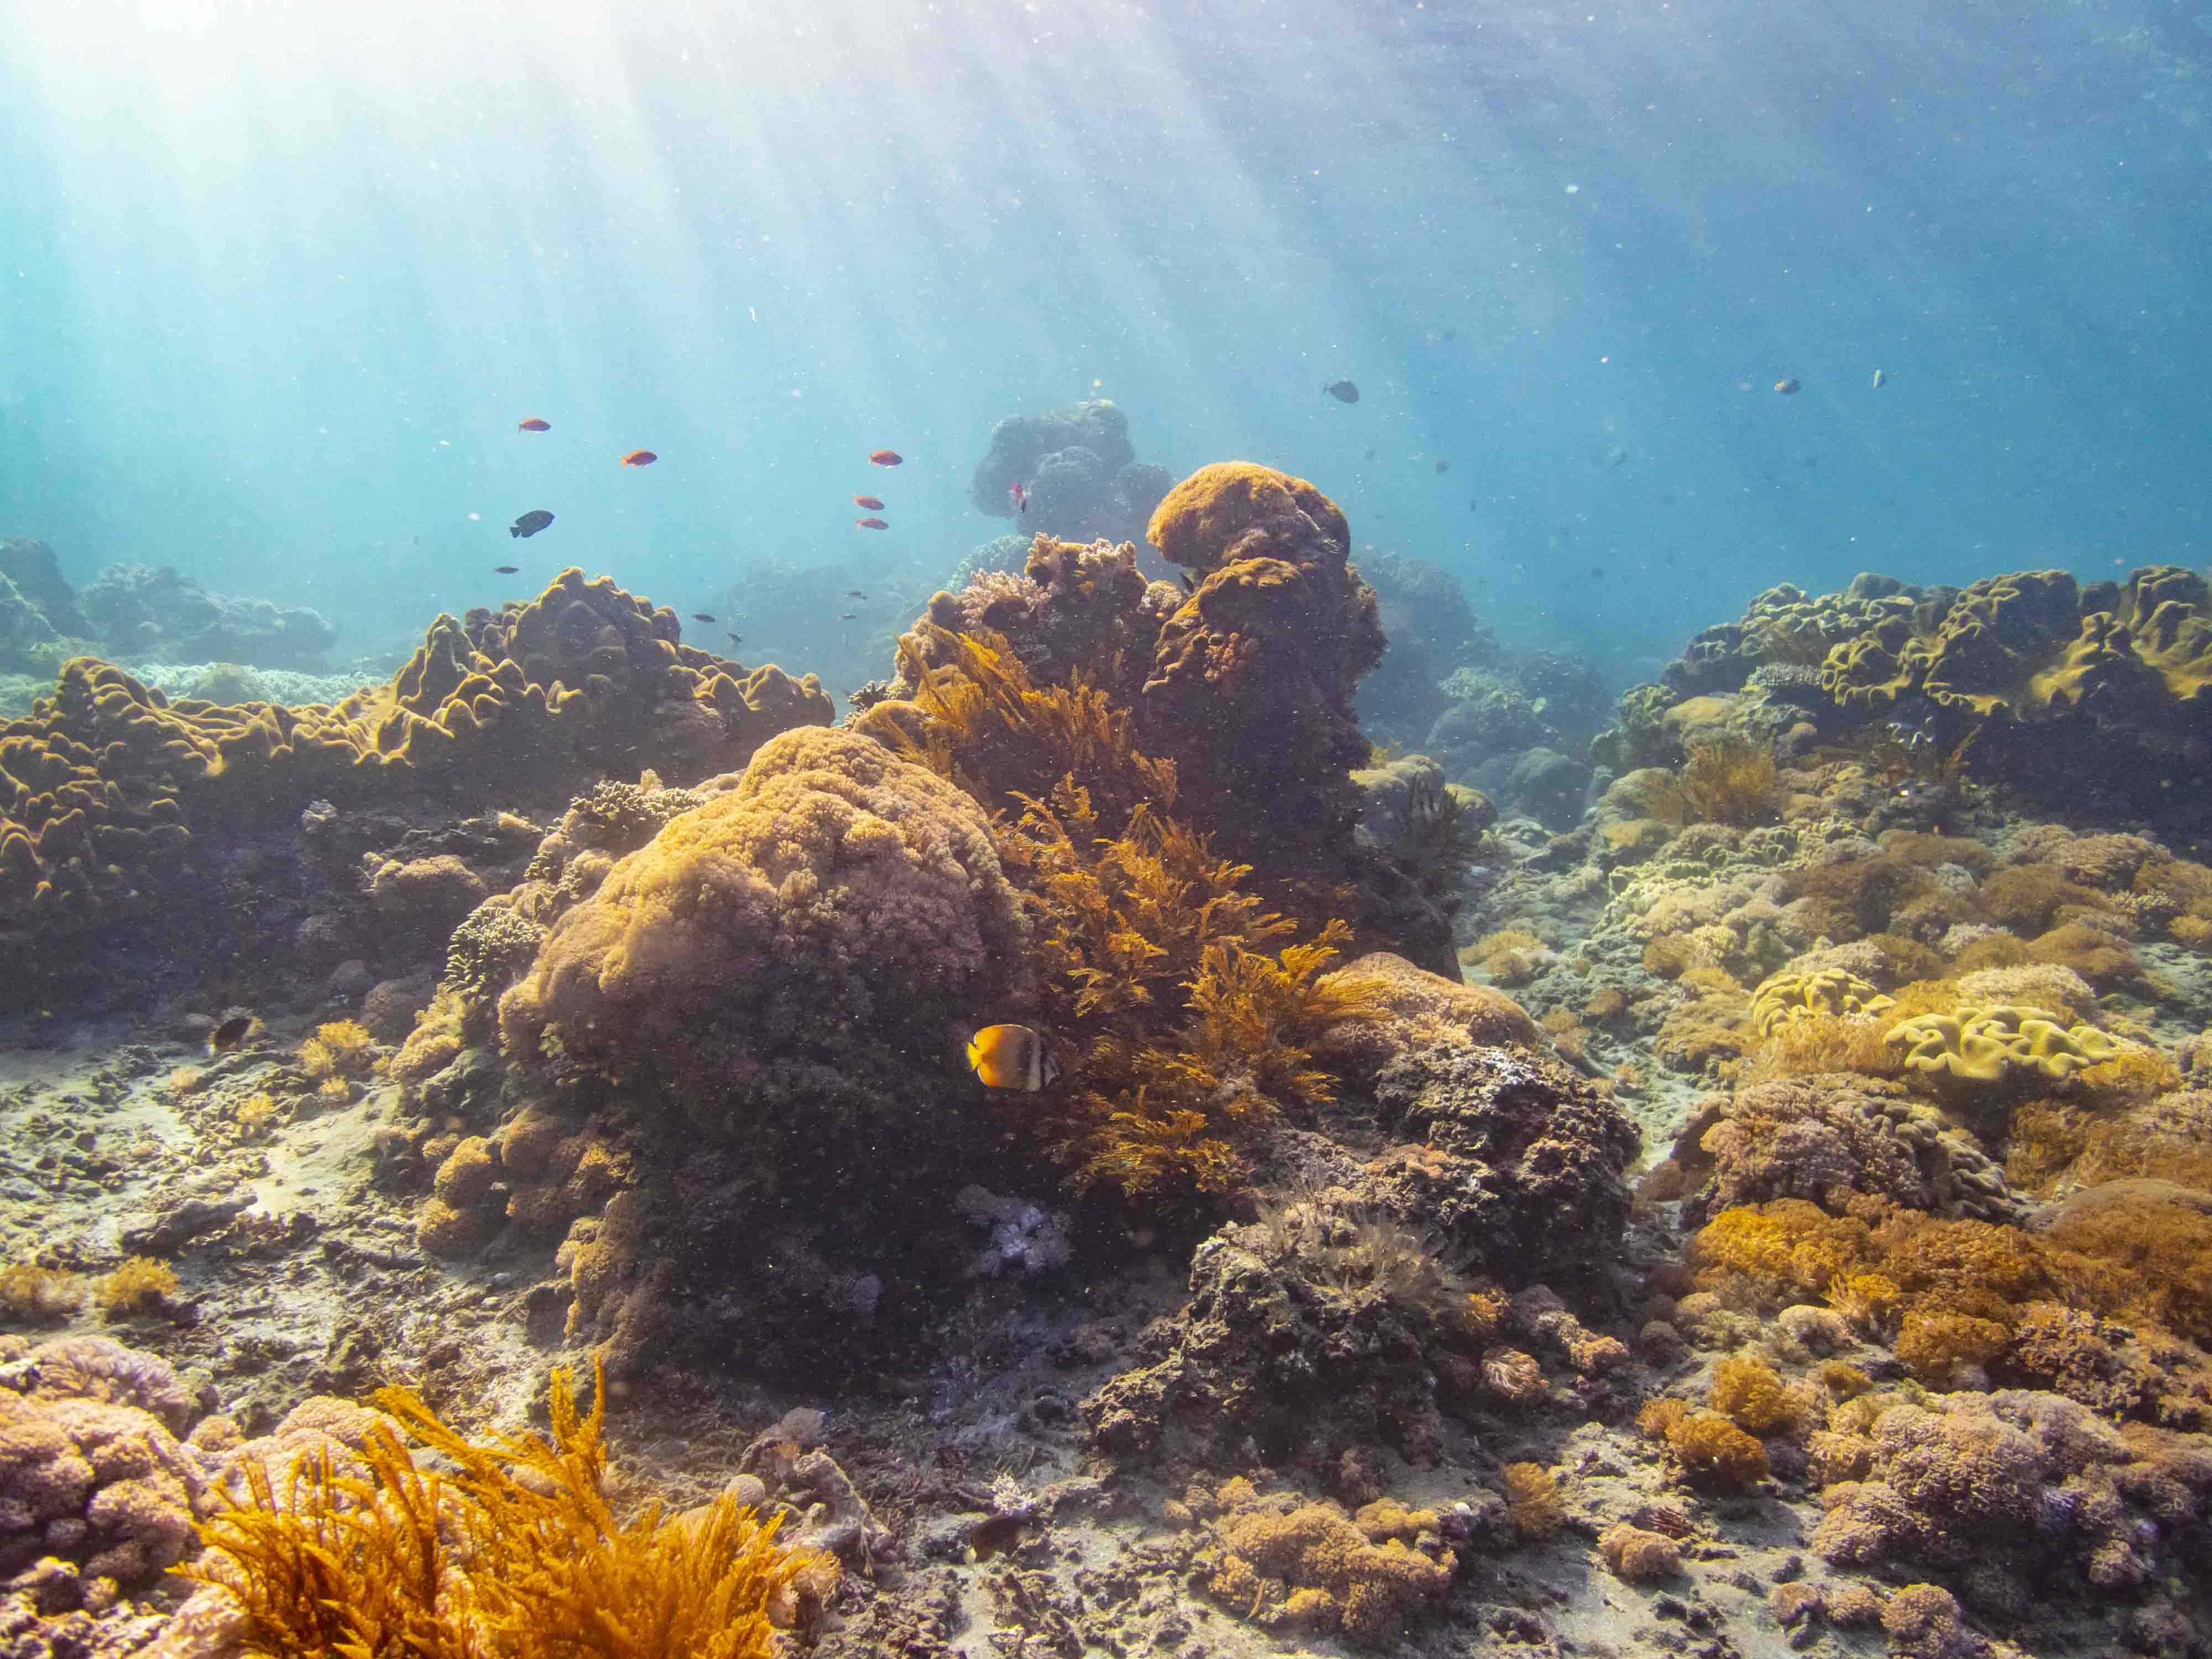 Beautiful reefs at dive site Gamat Bay worth preserving.